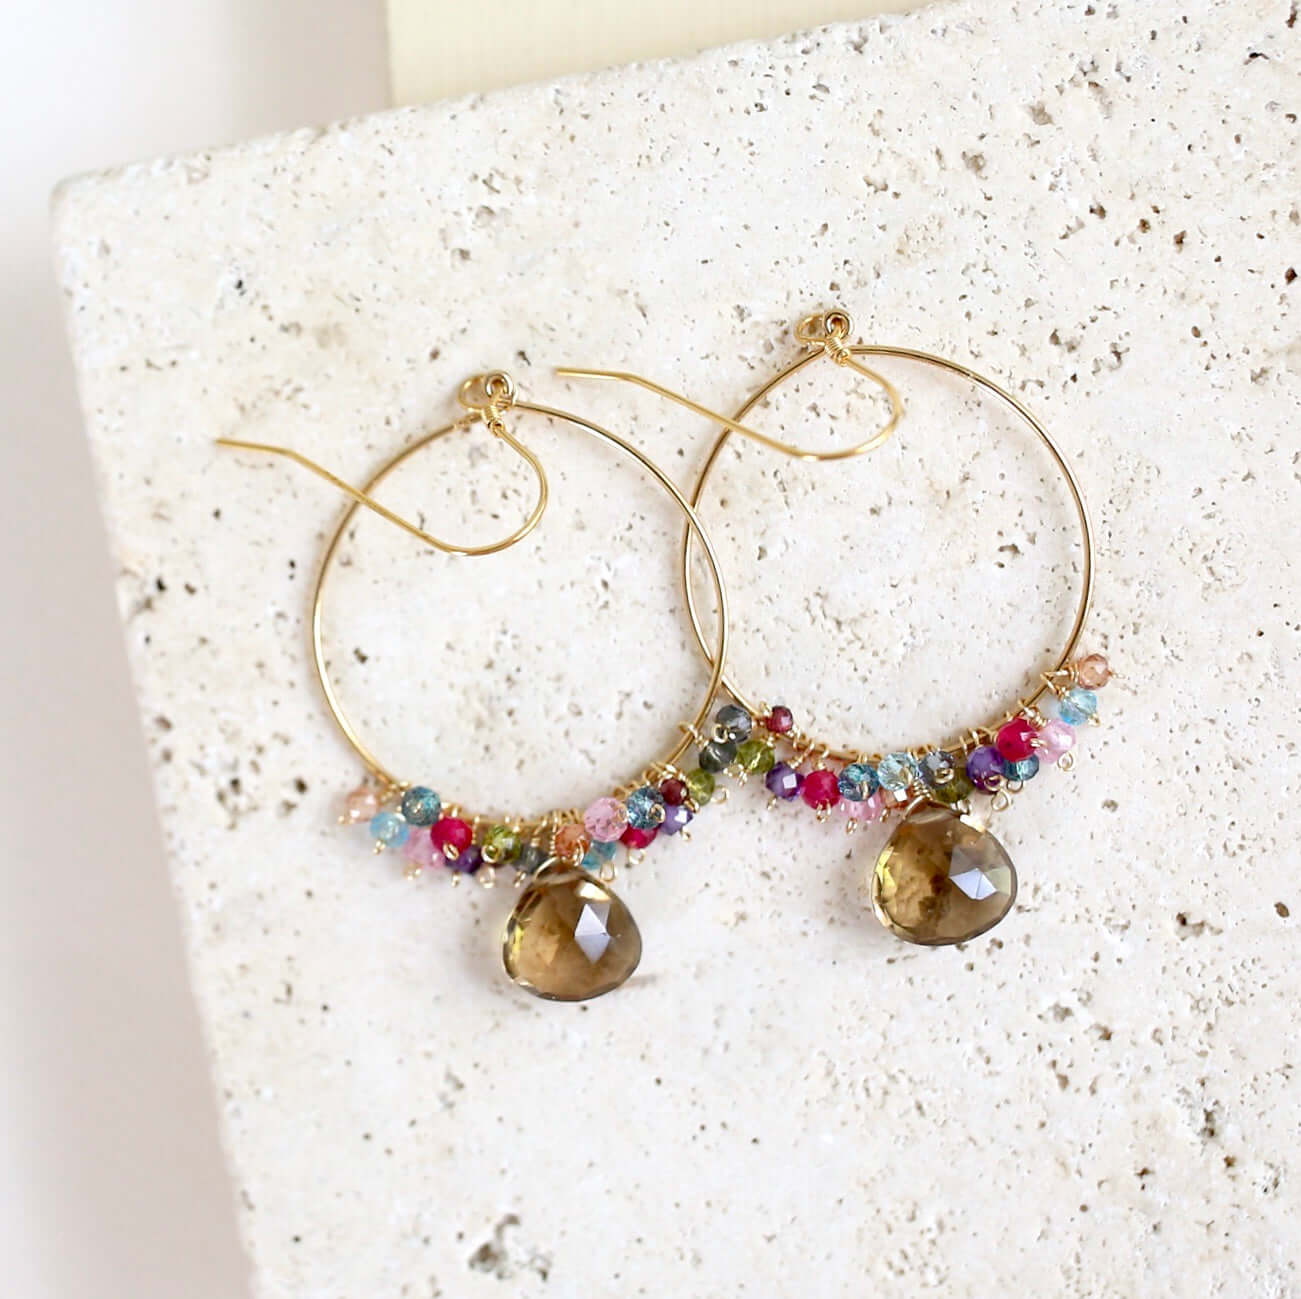 Unique hoop earrings with smoky quartz gemstones